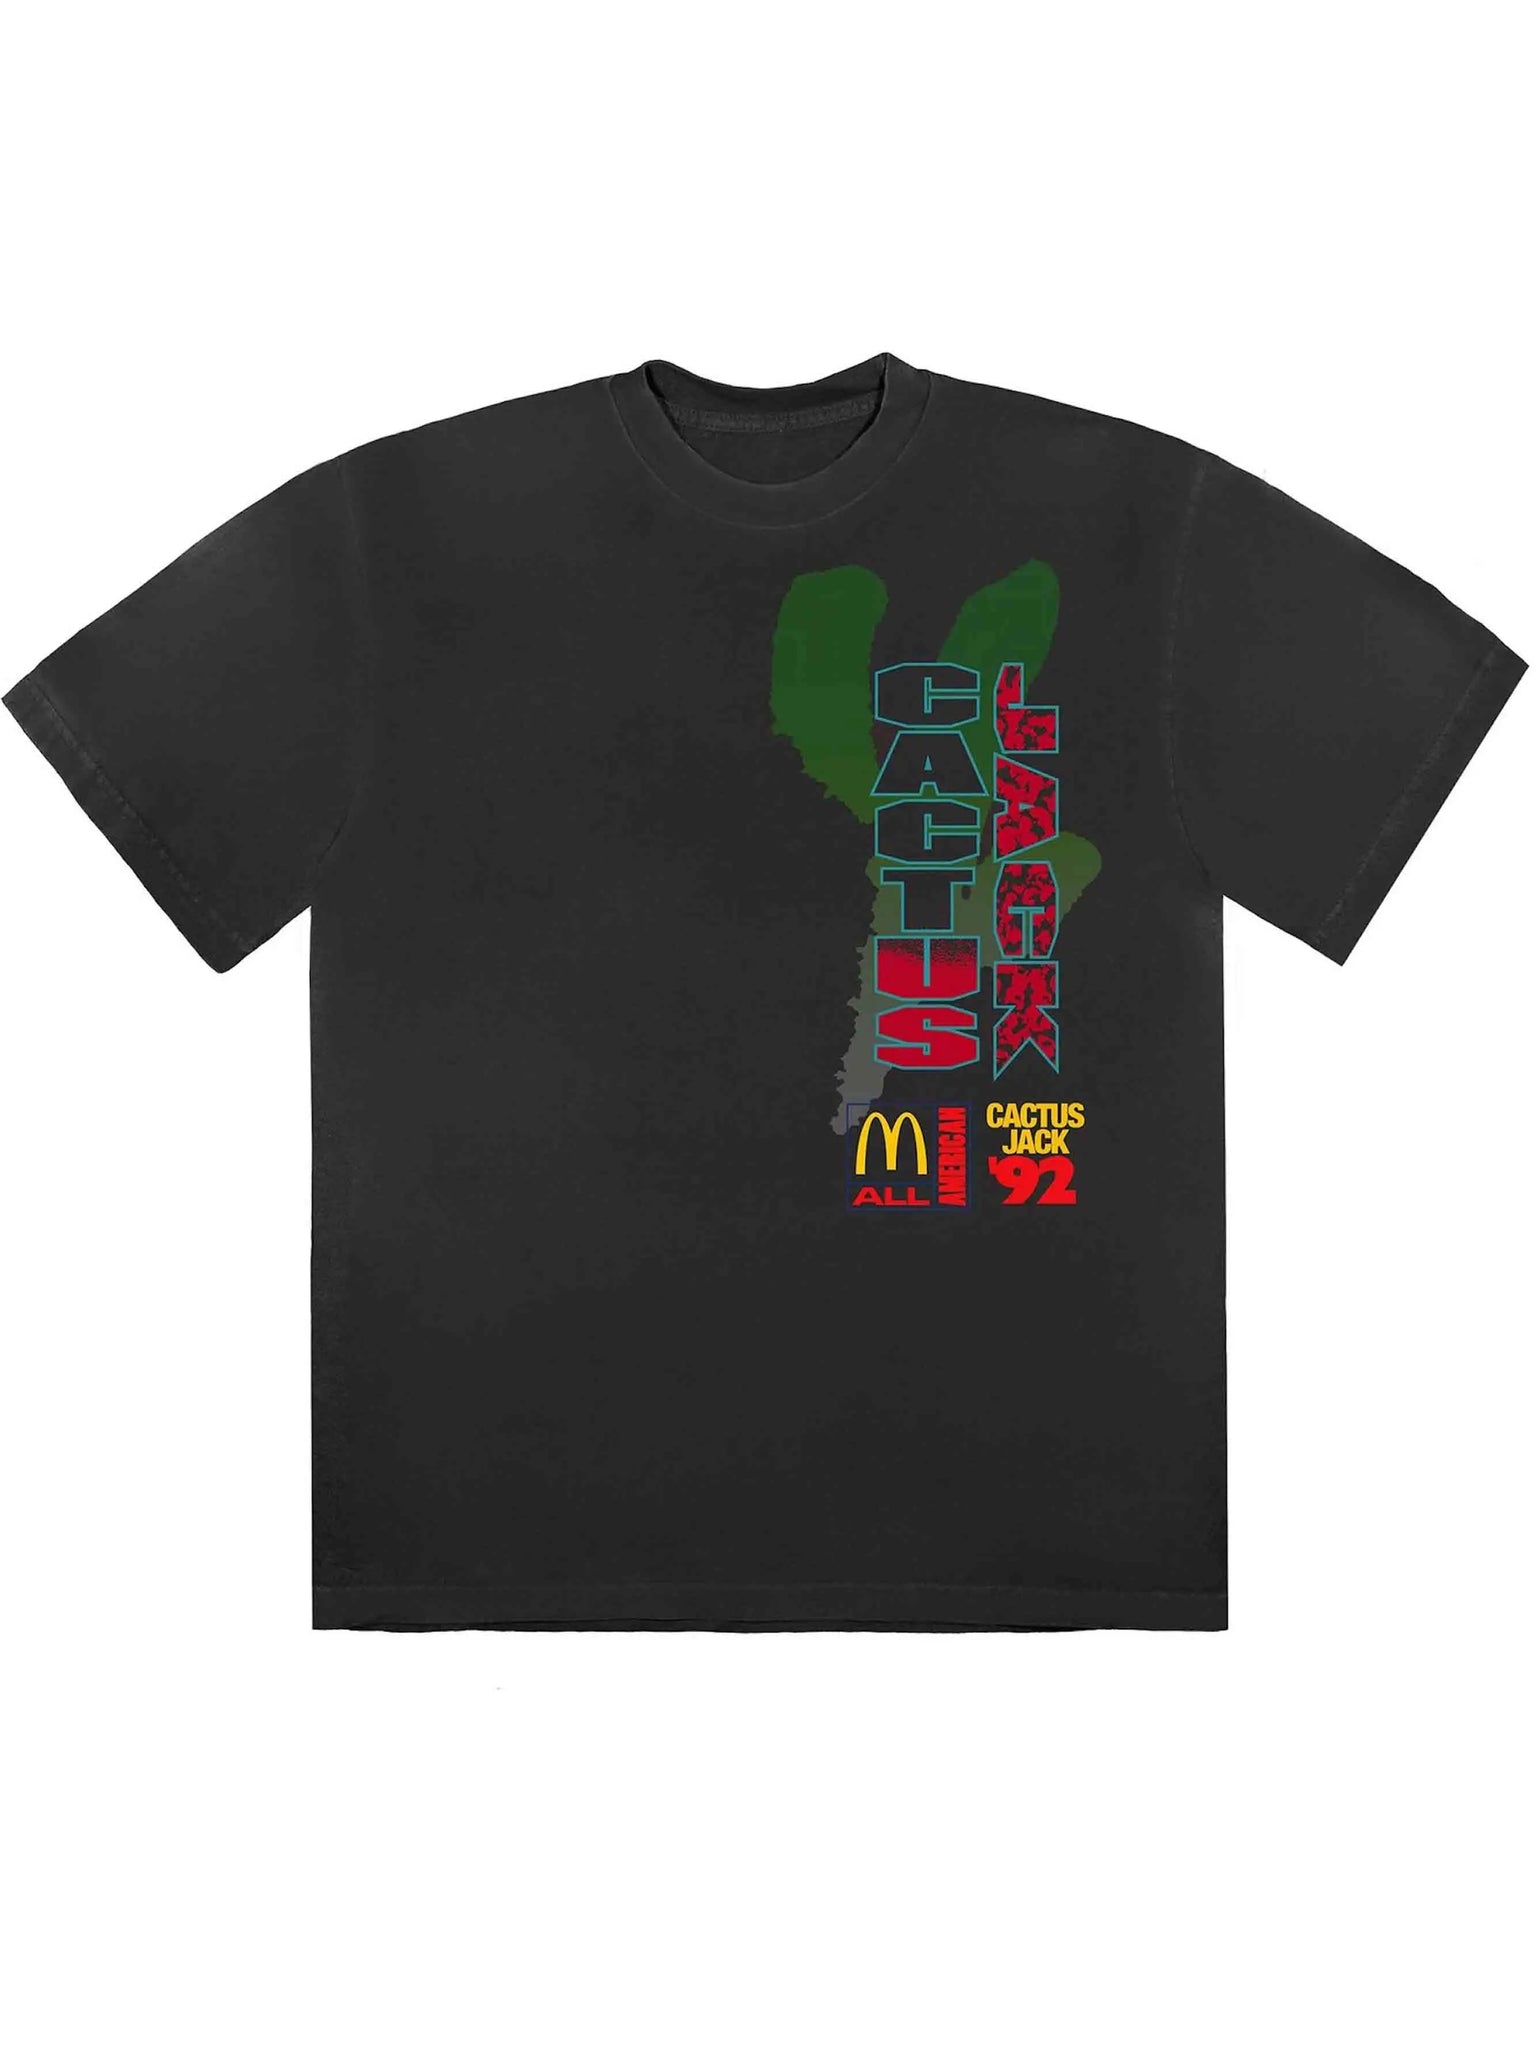 Travis Scott x McDonald's All American '92 T-shirt Washed Black Prior